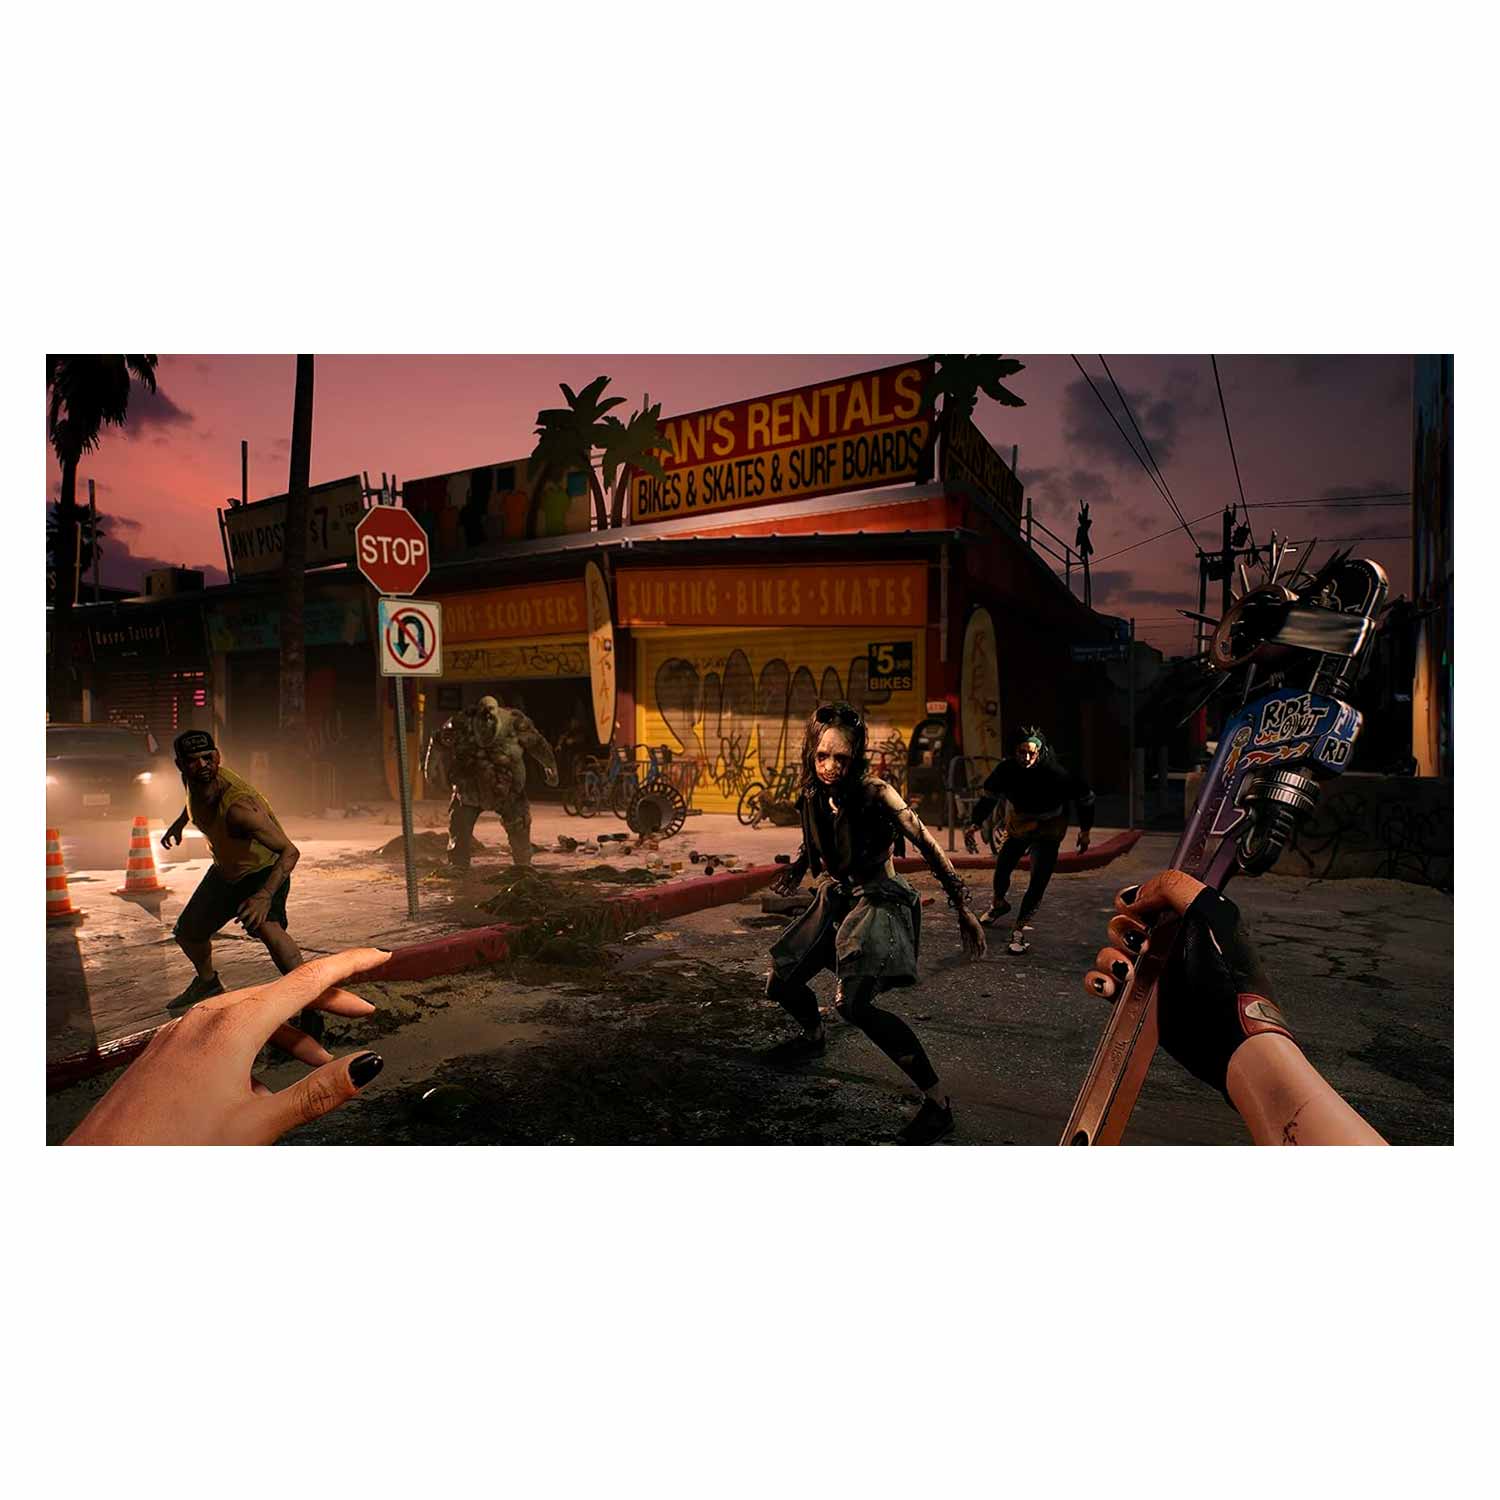 Jogo Dead Island 2 para PS5